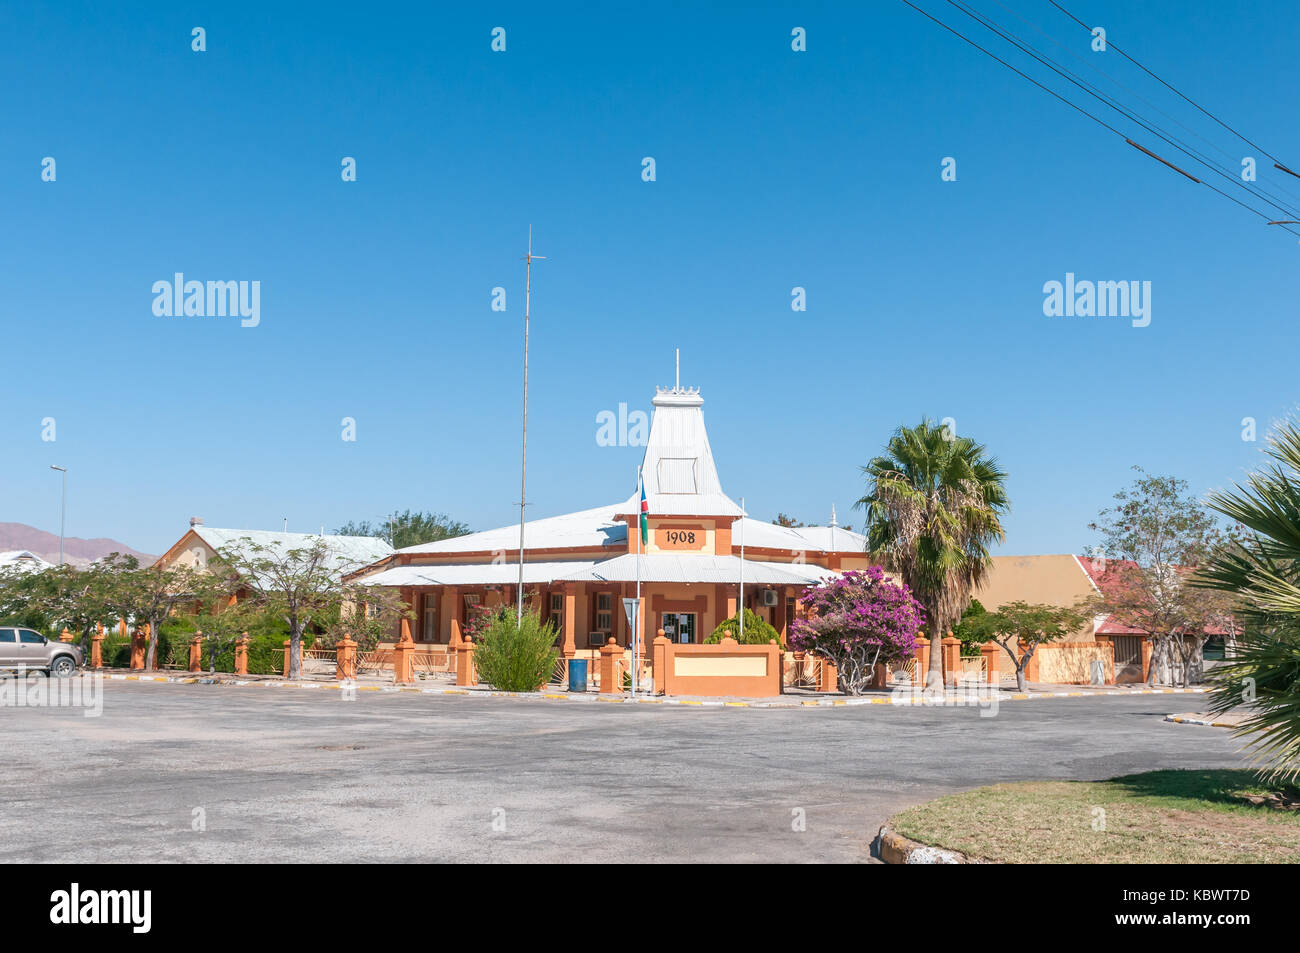 USAKOS, NAMIBIA - JULY 3, 2017: The municipal building in Usakos in the Erongo Region of Namibia Stock Photo